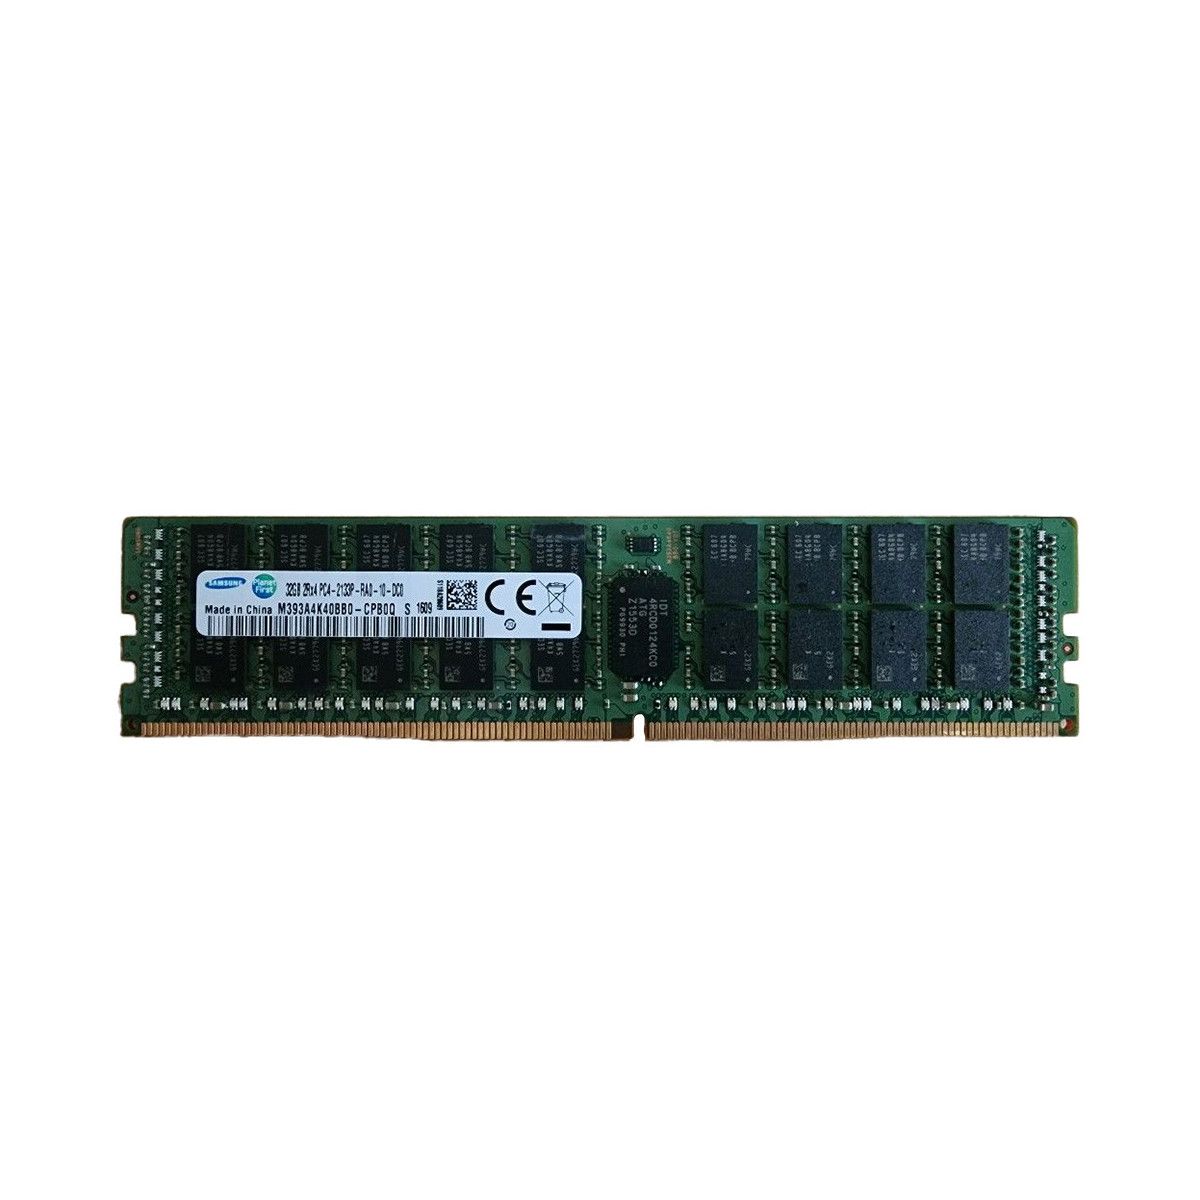 728629-B21-MS - Memstar 1x 32GB DDR4-2133 RDIMM PC4-17000P-R - Mem-Star Compatible OEM Memory 1 - Memstar 